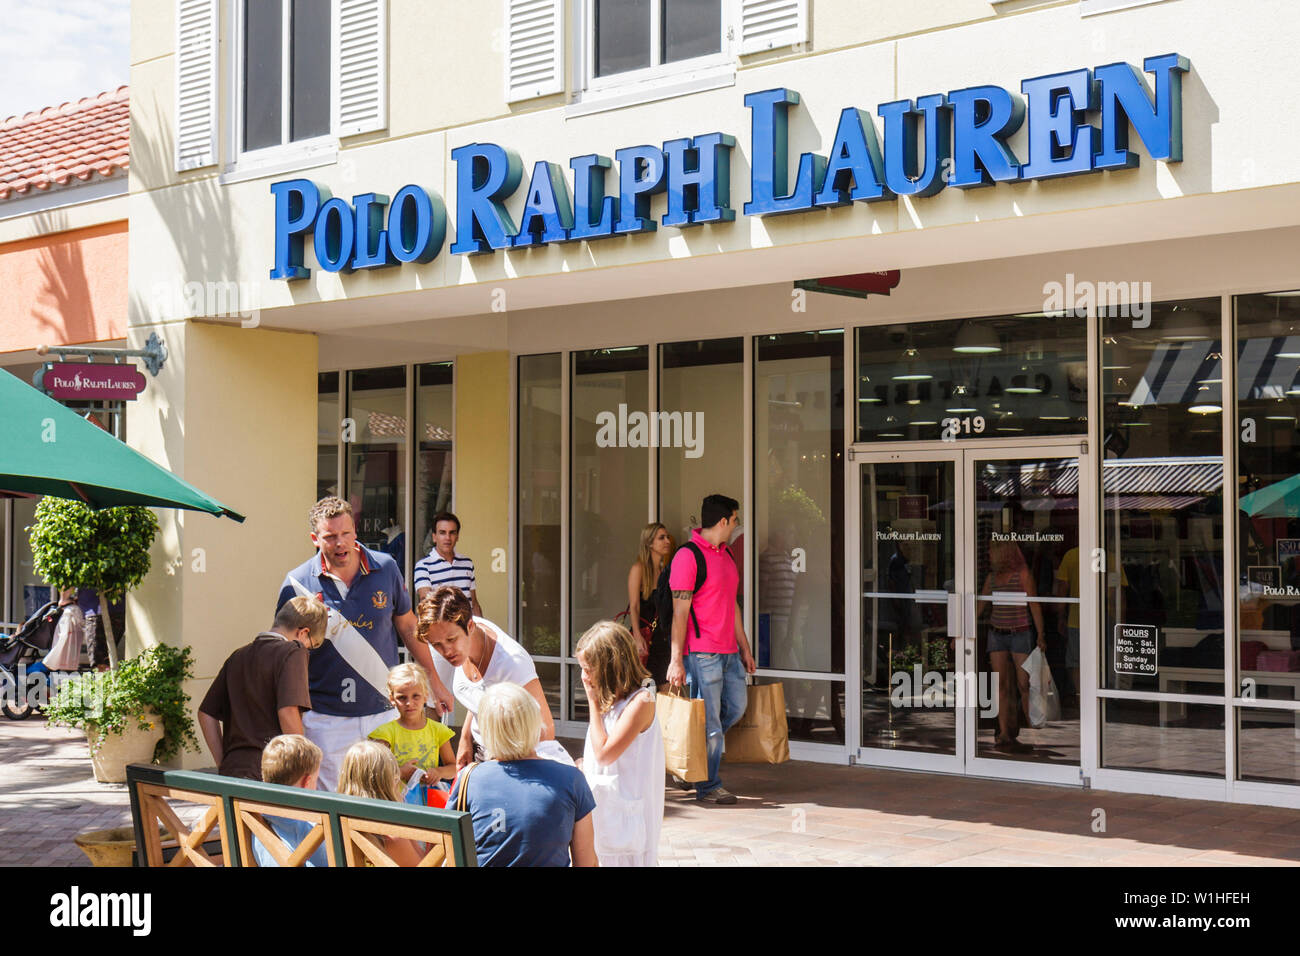 Polo Ralph Lauren Children's Factory Store - Orlando, FL